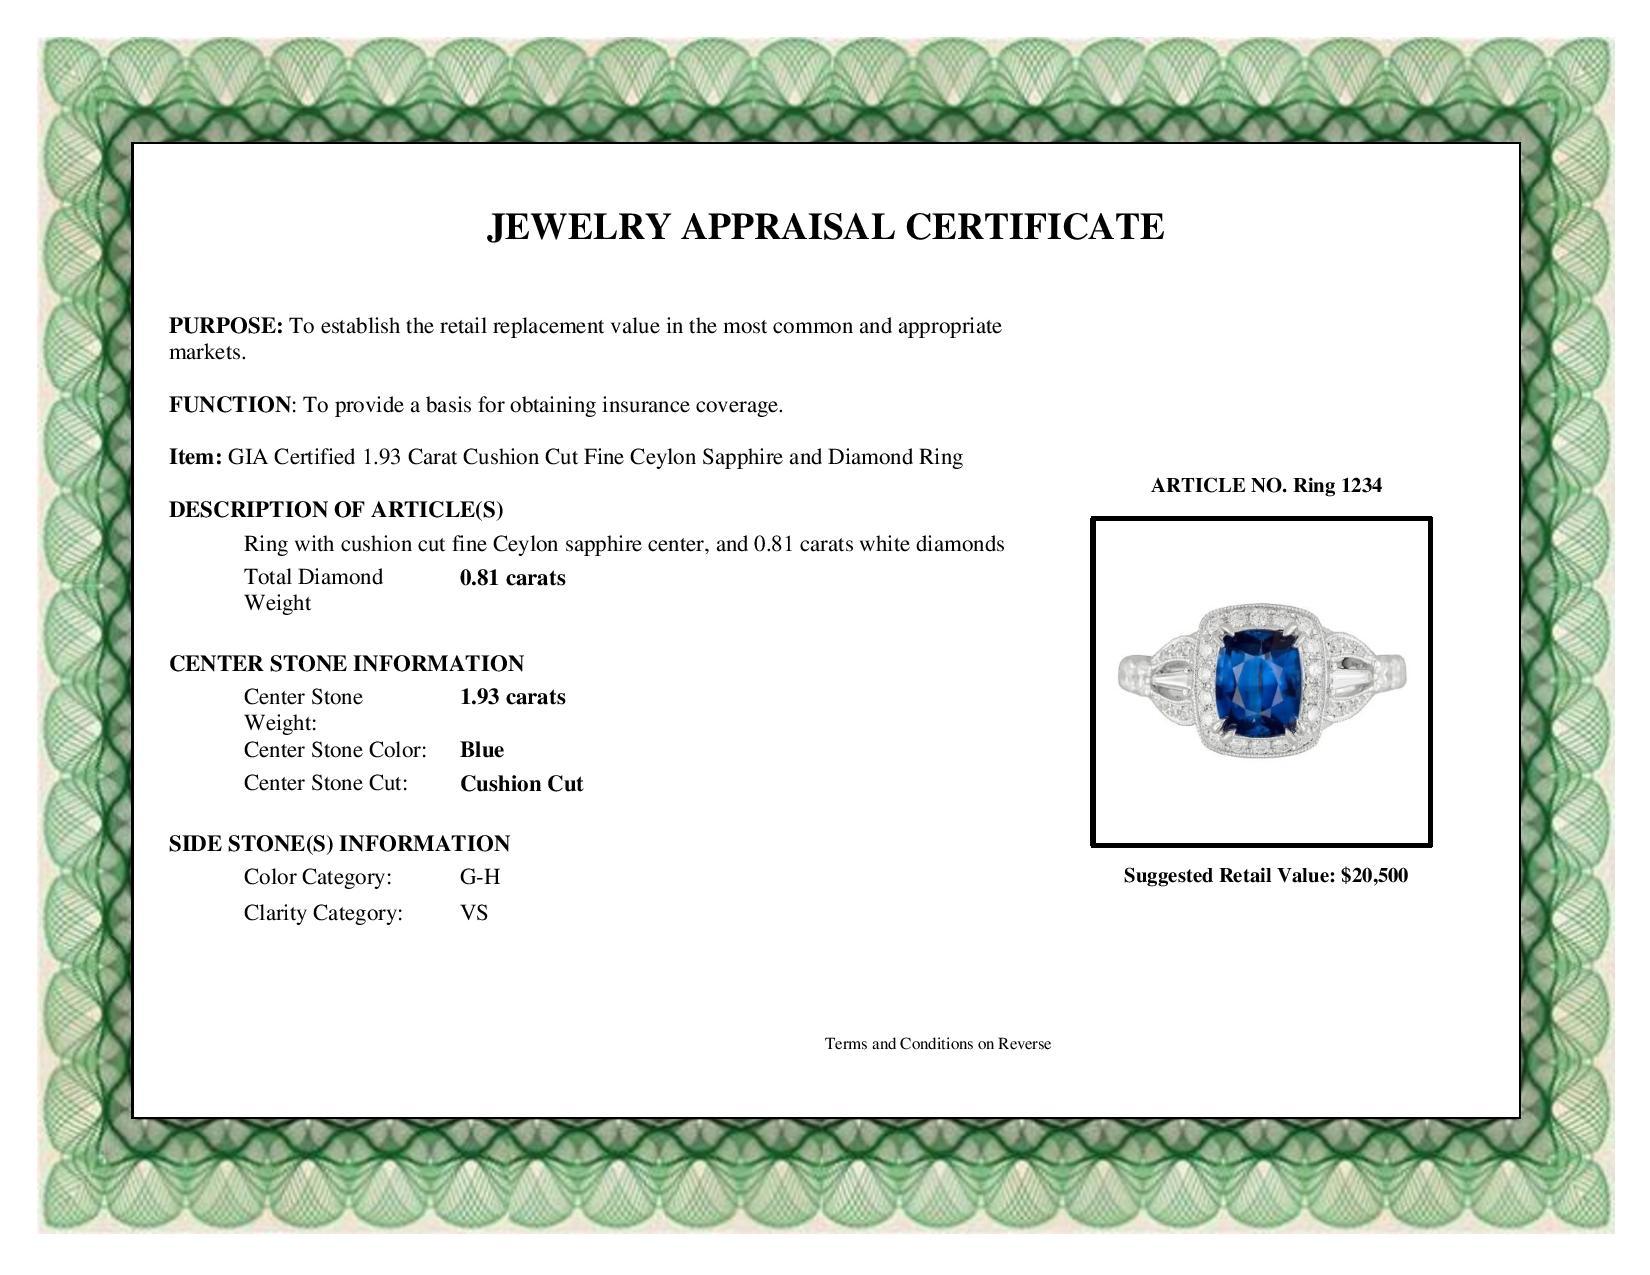 DiamondTown GIA Certified 1.93 Carat Cushion Cut Fine Ceylon Sapphire Ring 2